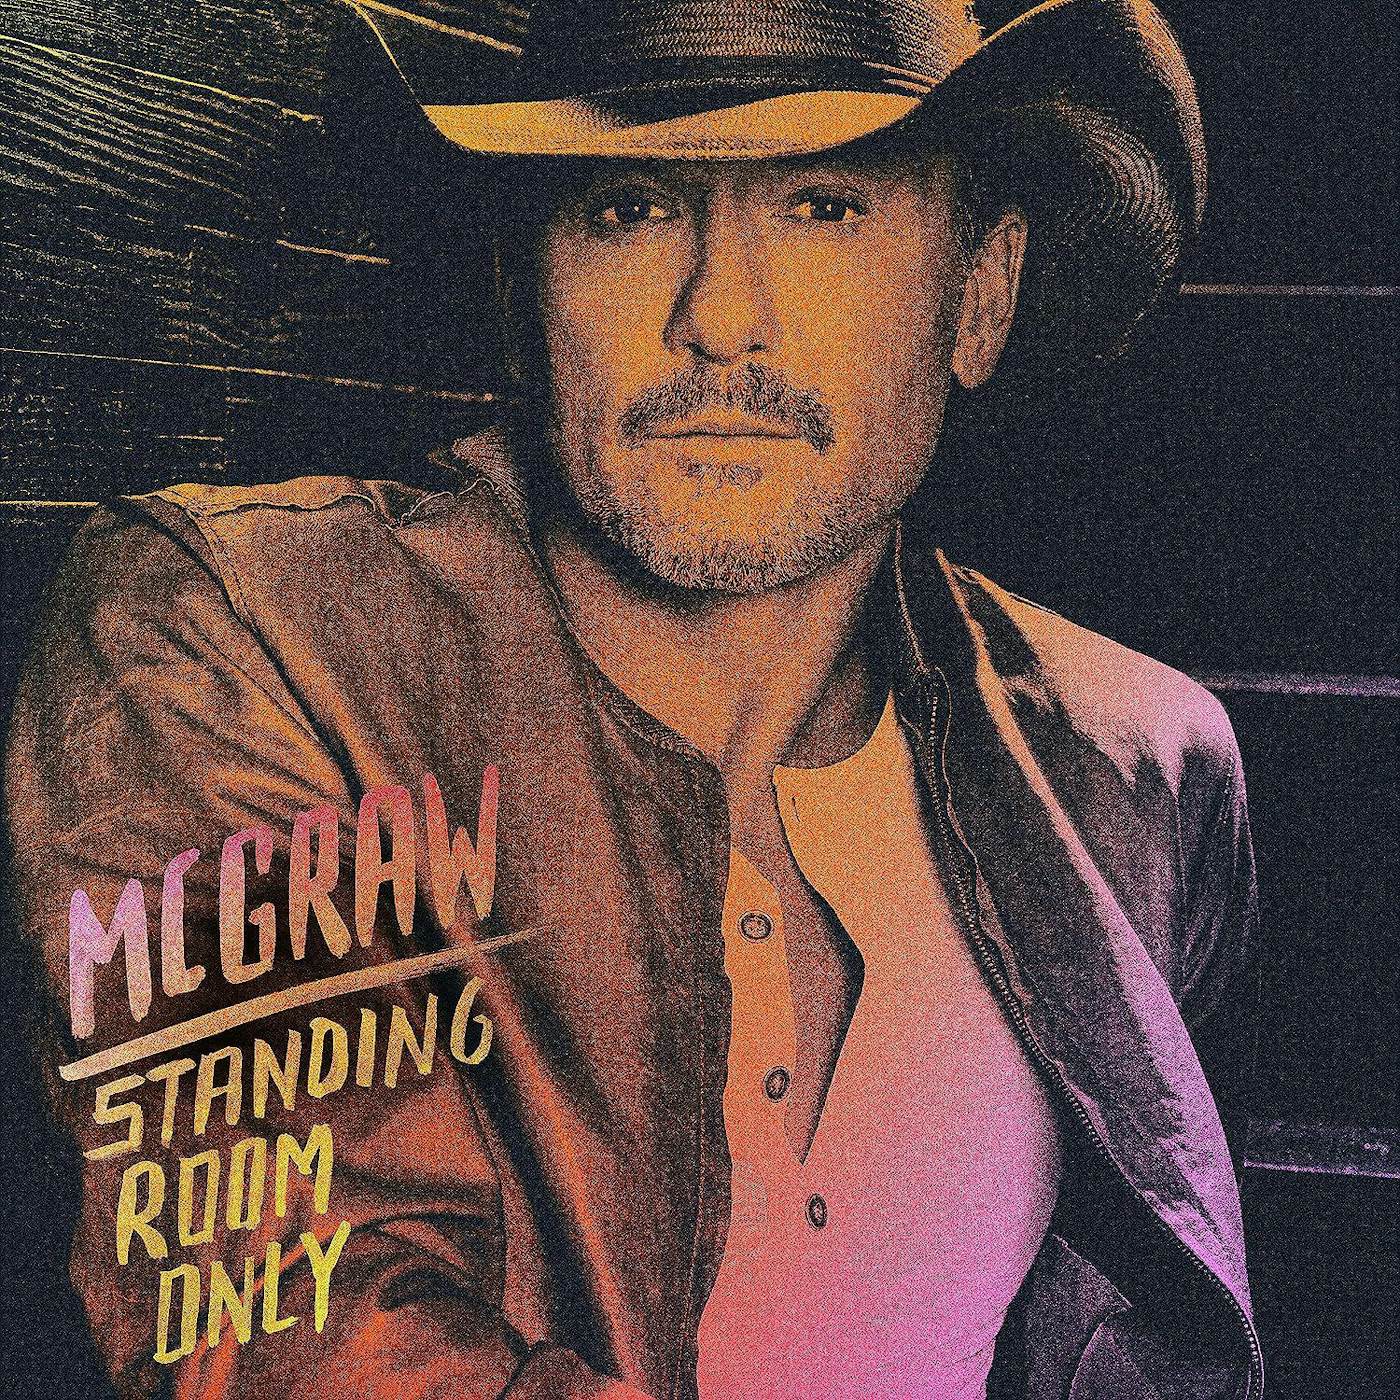 Tim McGraw Standing Room Only [Clear Vinyl/2Lp) Vinyl Record